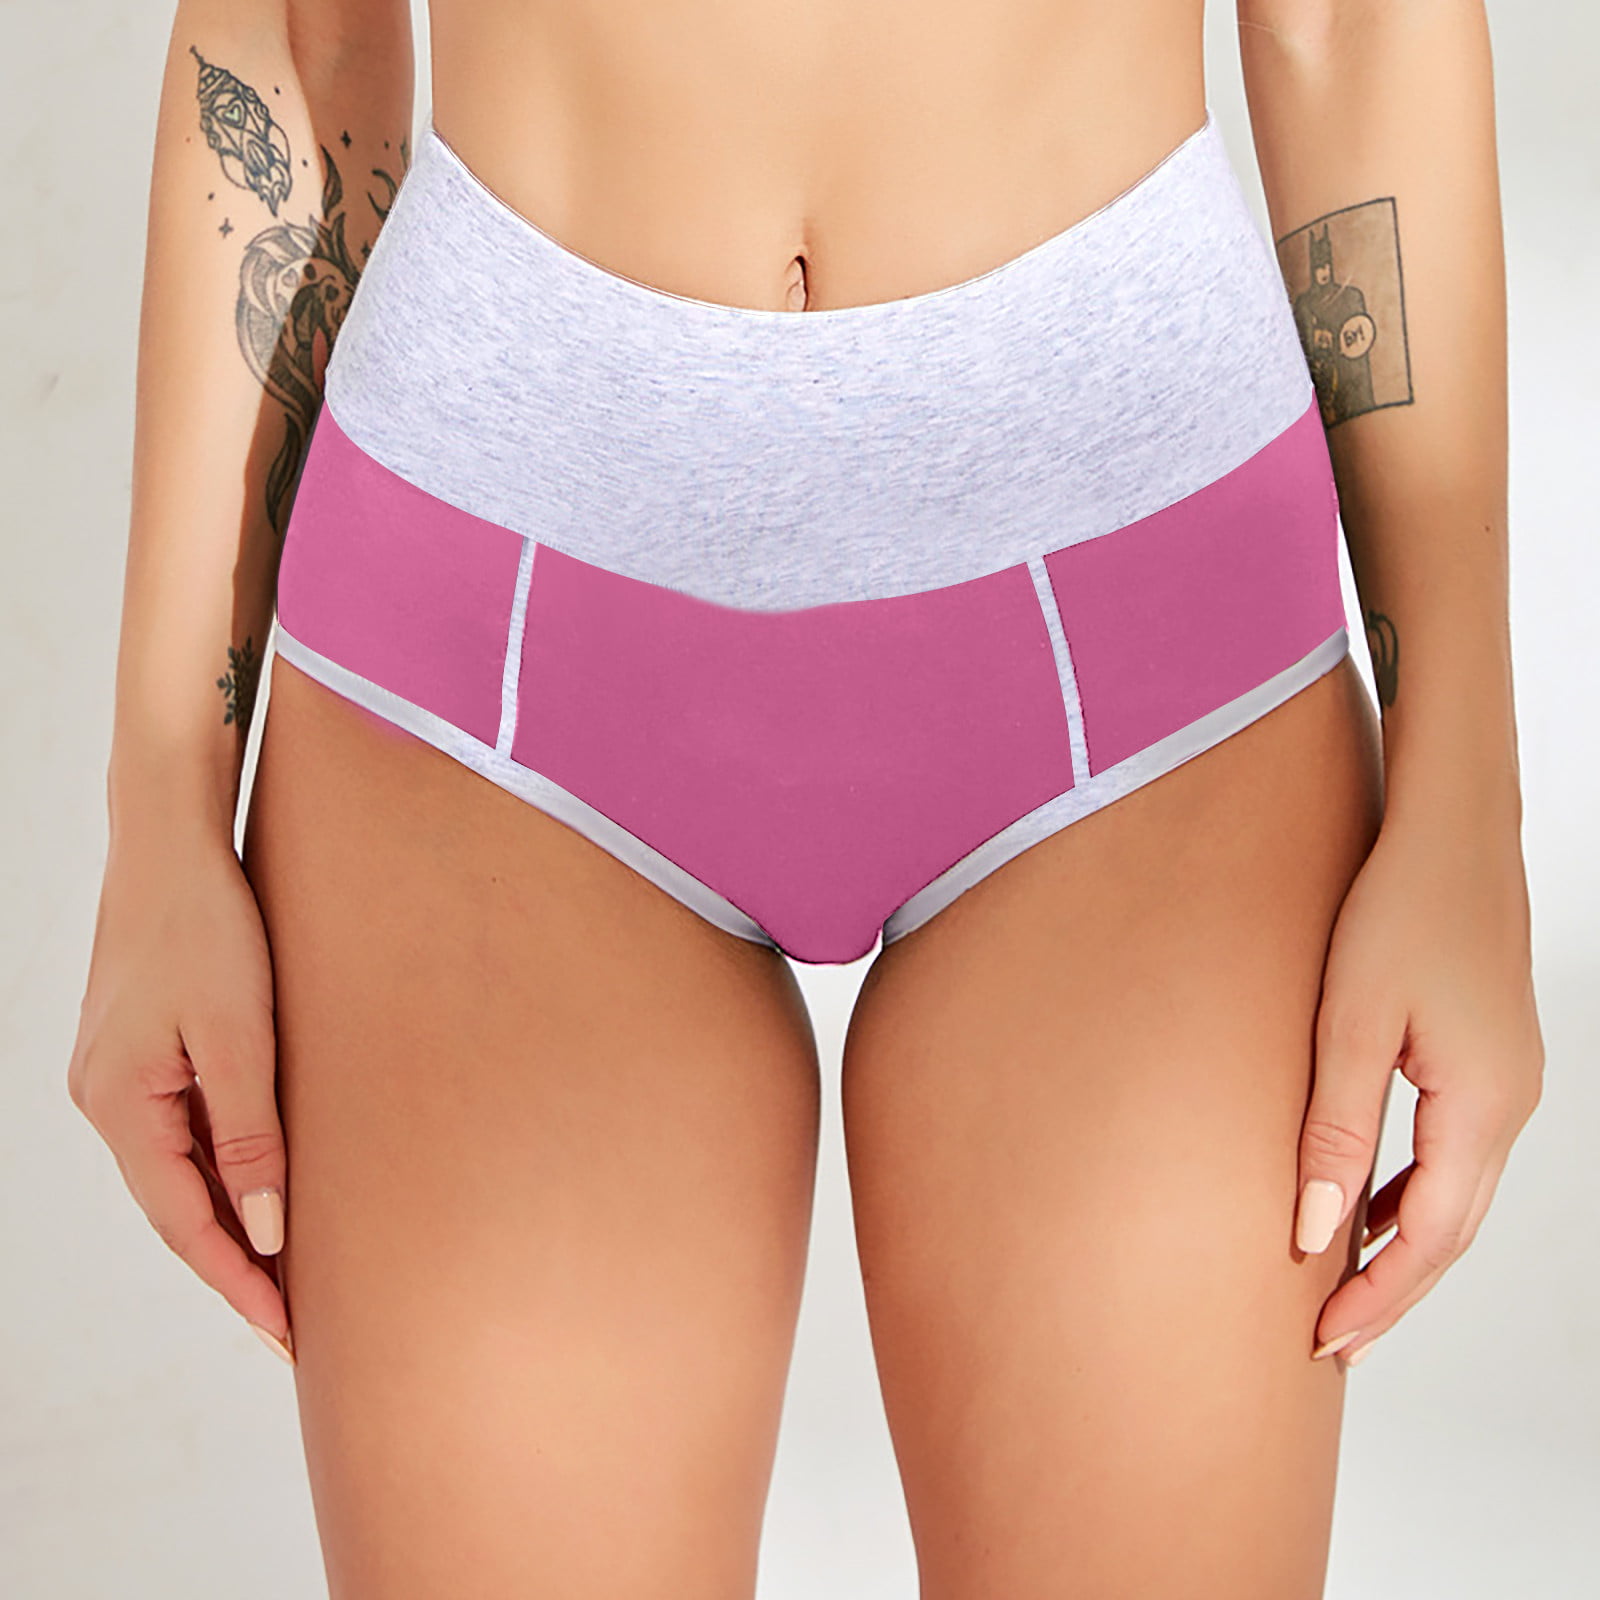 Qcmgmg Briefs Underwear Women High Waisted Tummy Control Plus Size